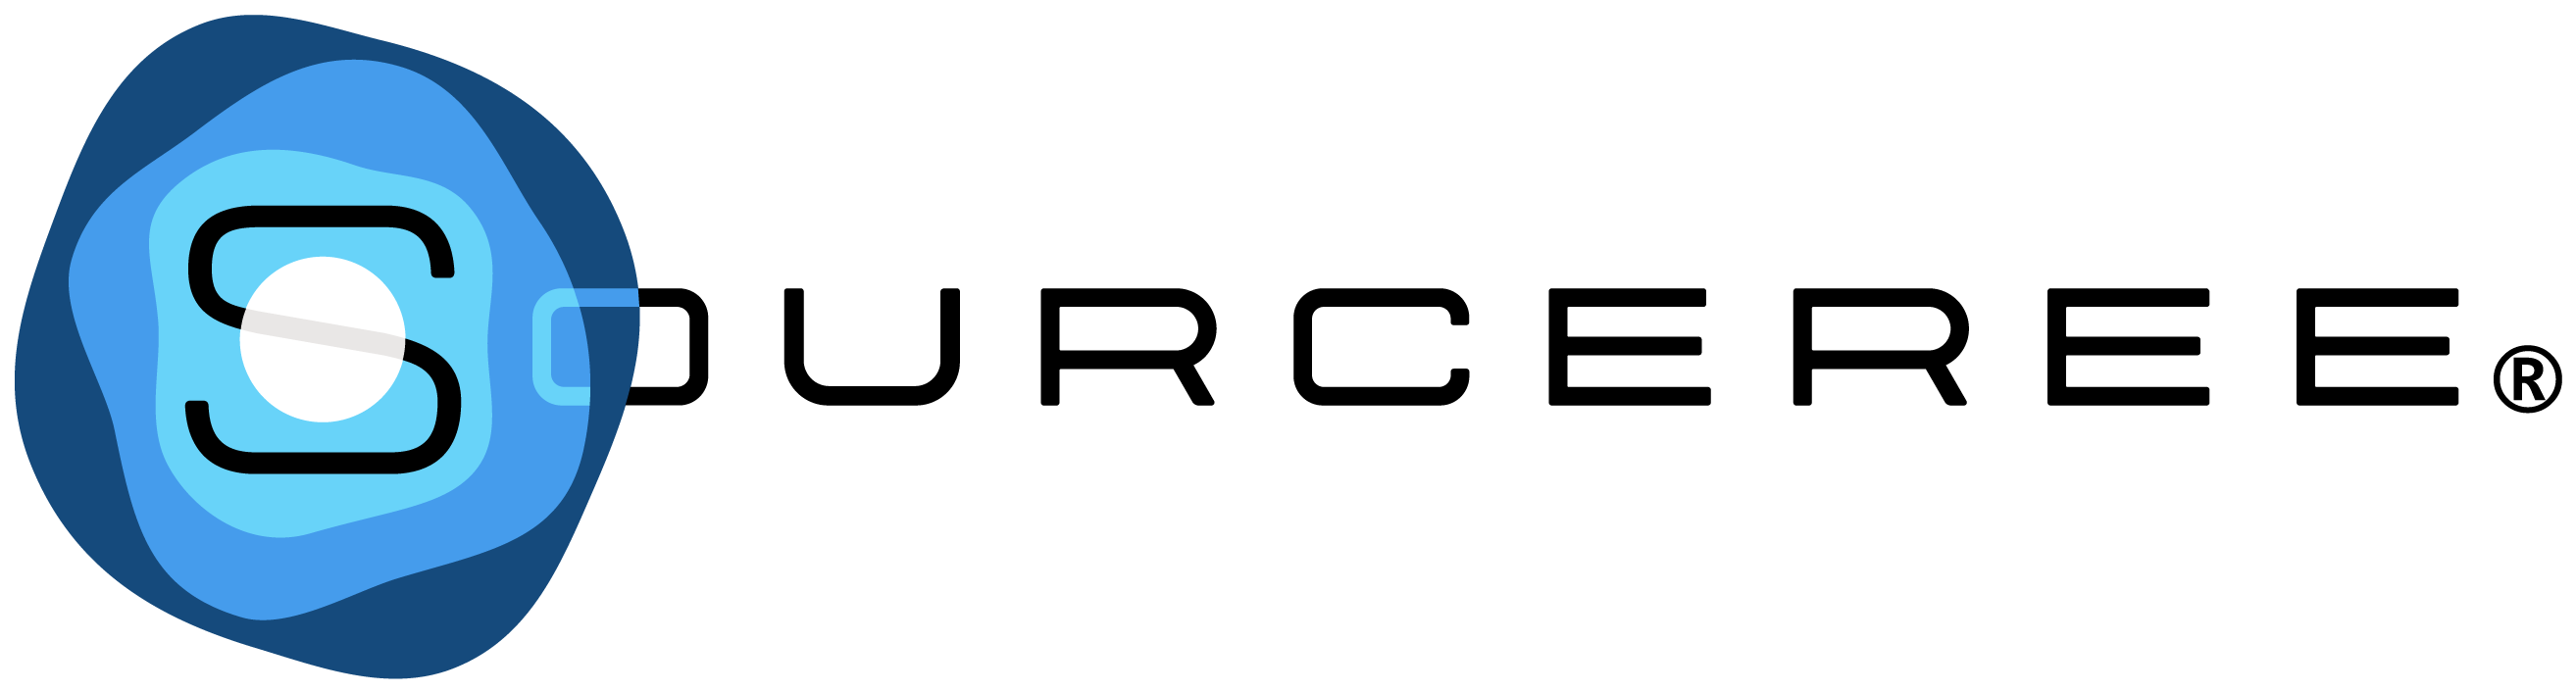 sourceree-logo-black-letters